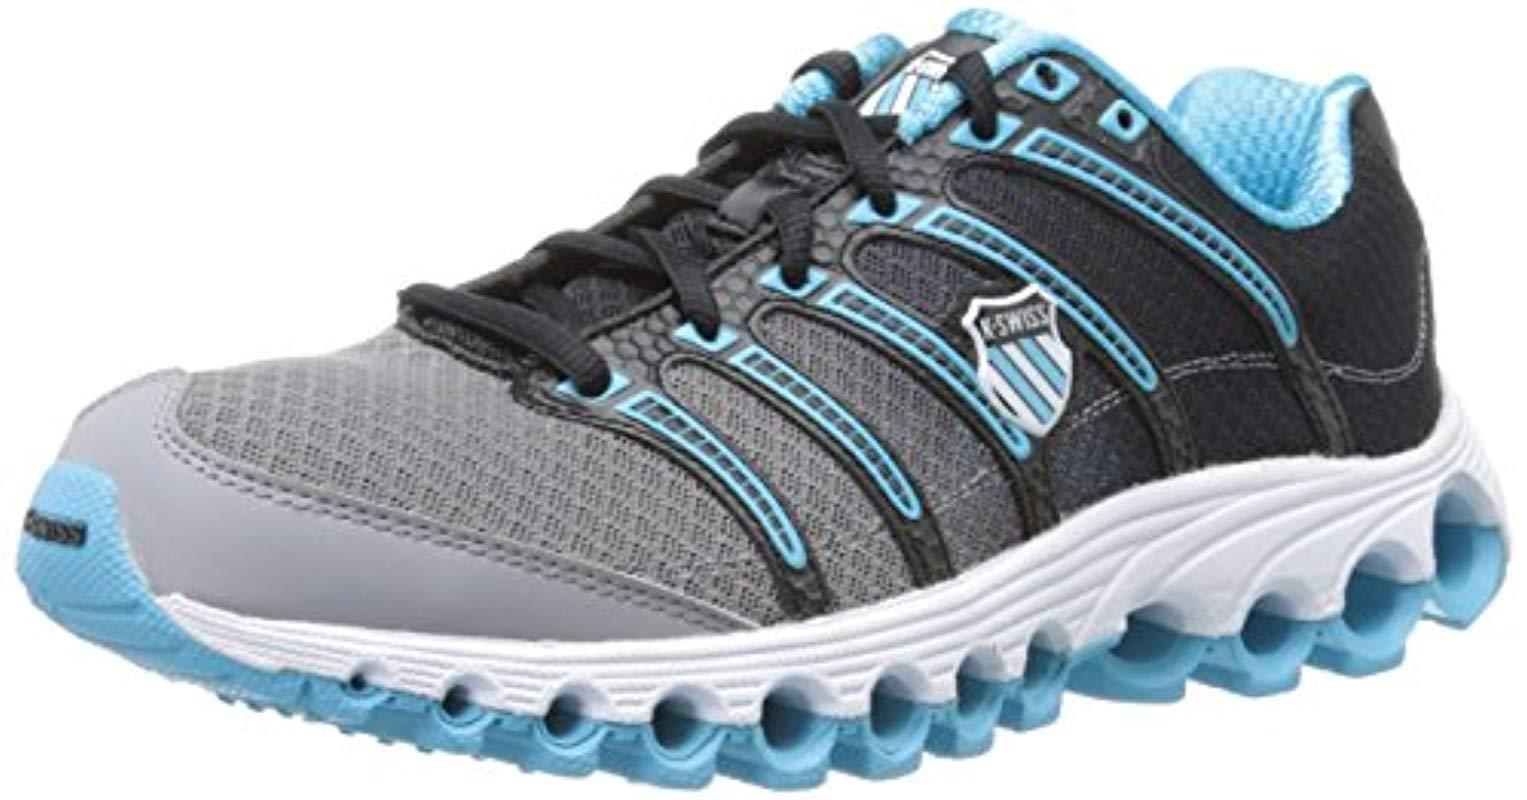 K-swiss Tubes Run 100 Athletic Shoe in Blue | Lyst